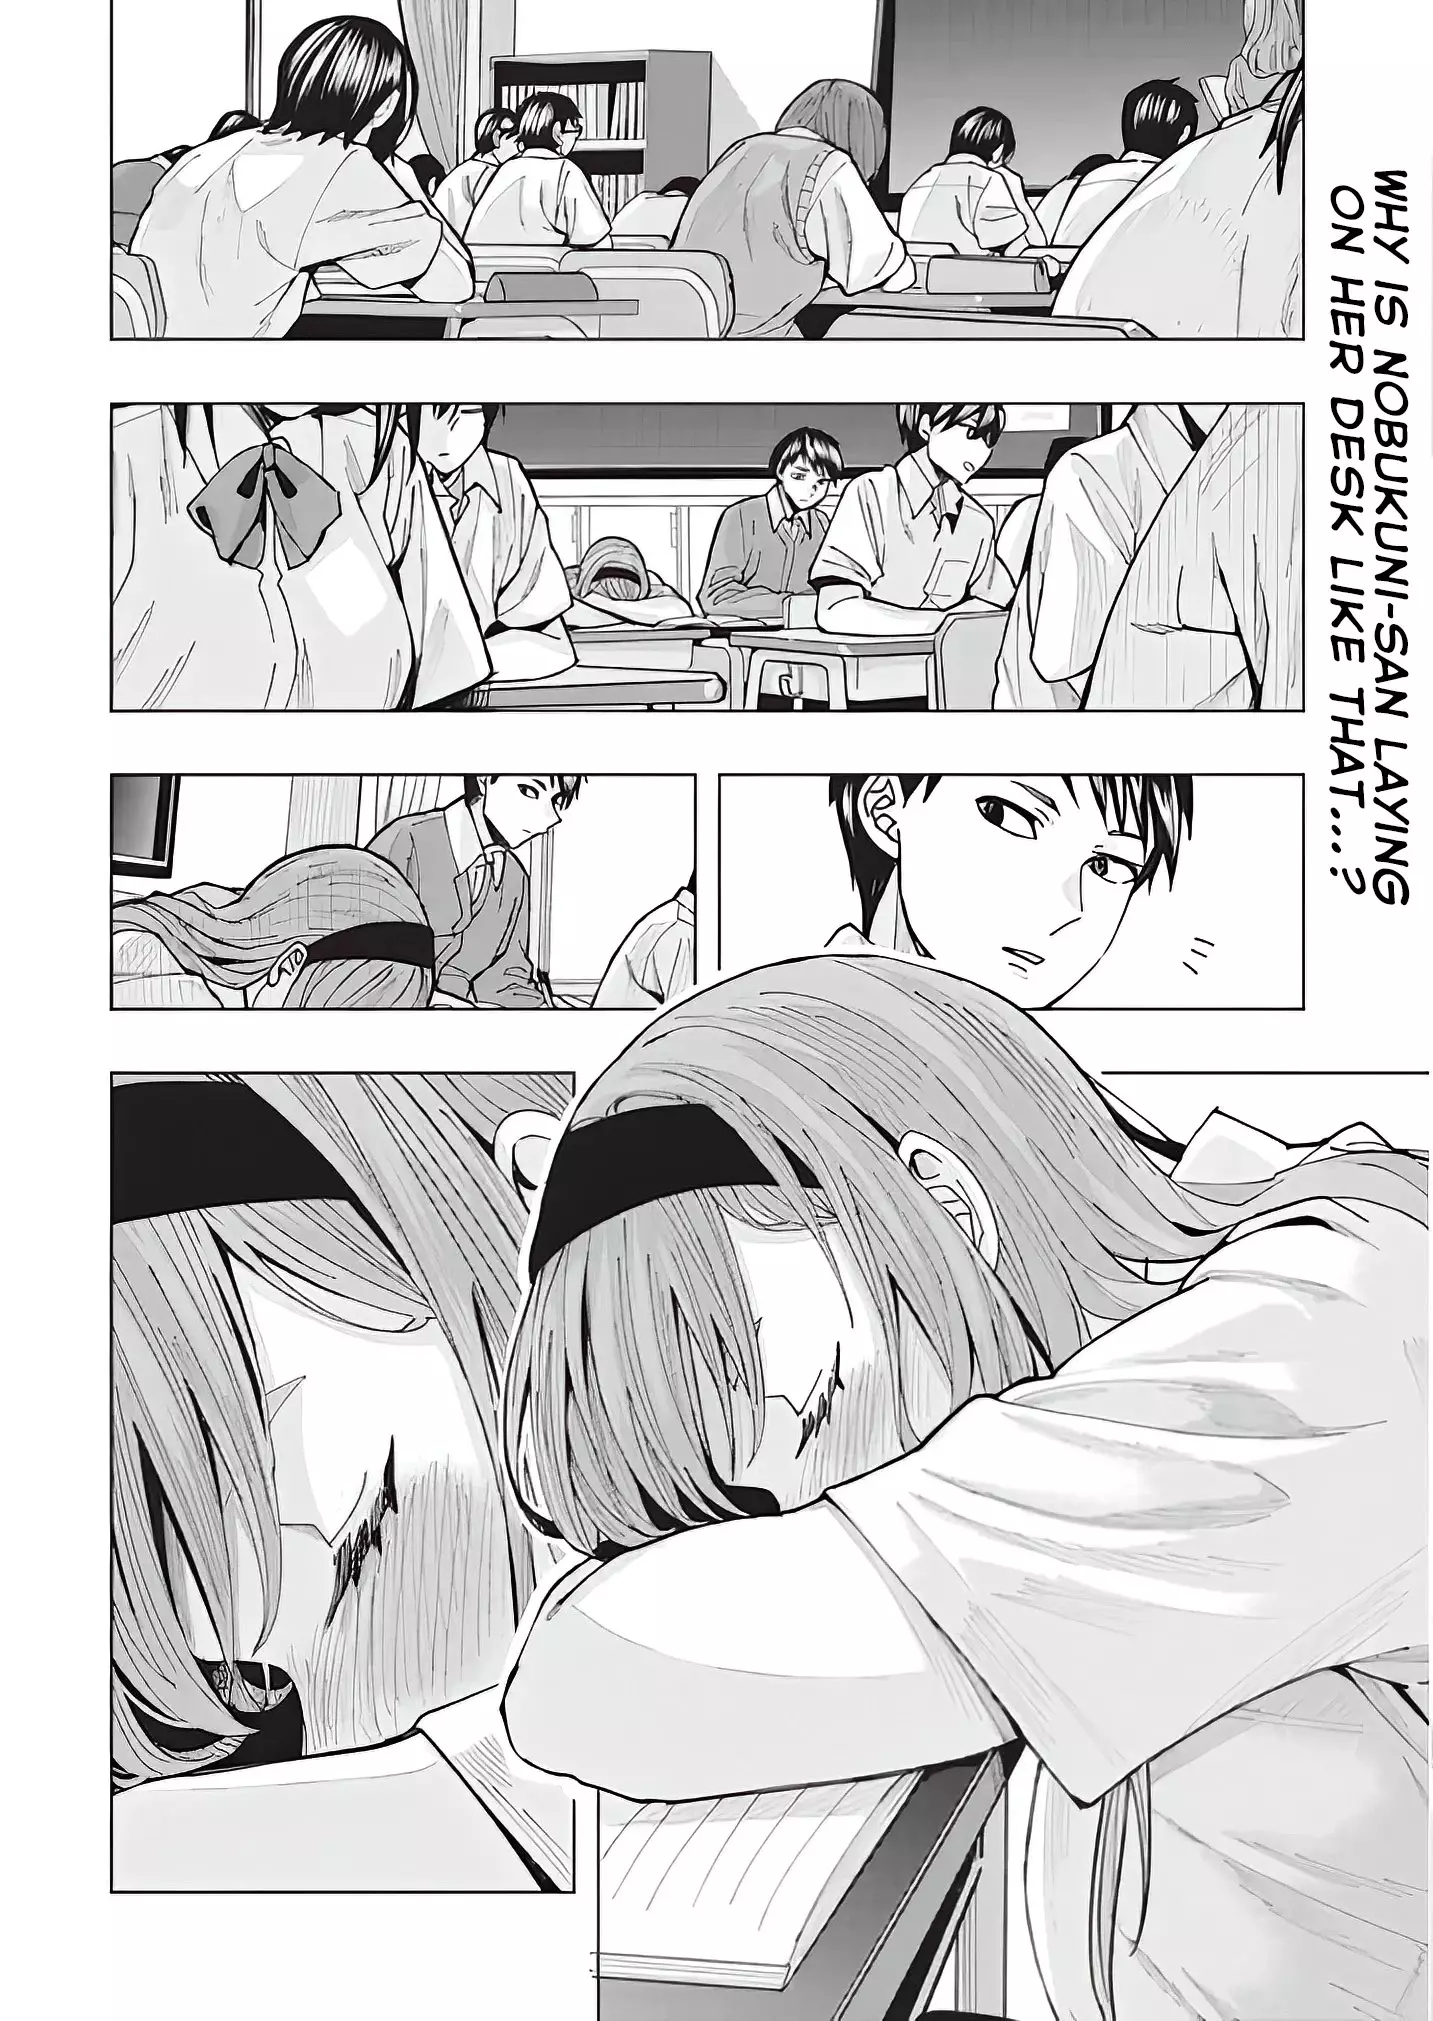 "nobukuni-San" Does She Like Me? - 2 page 3